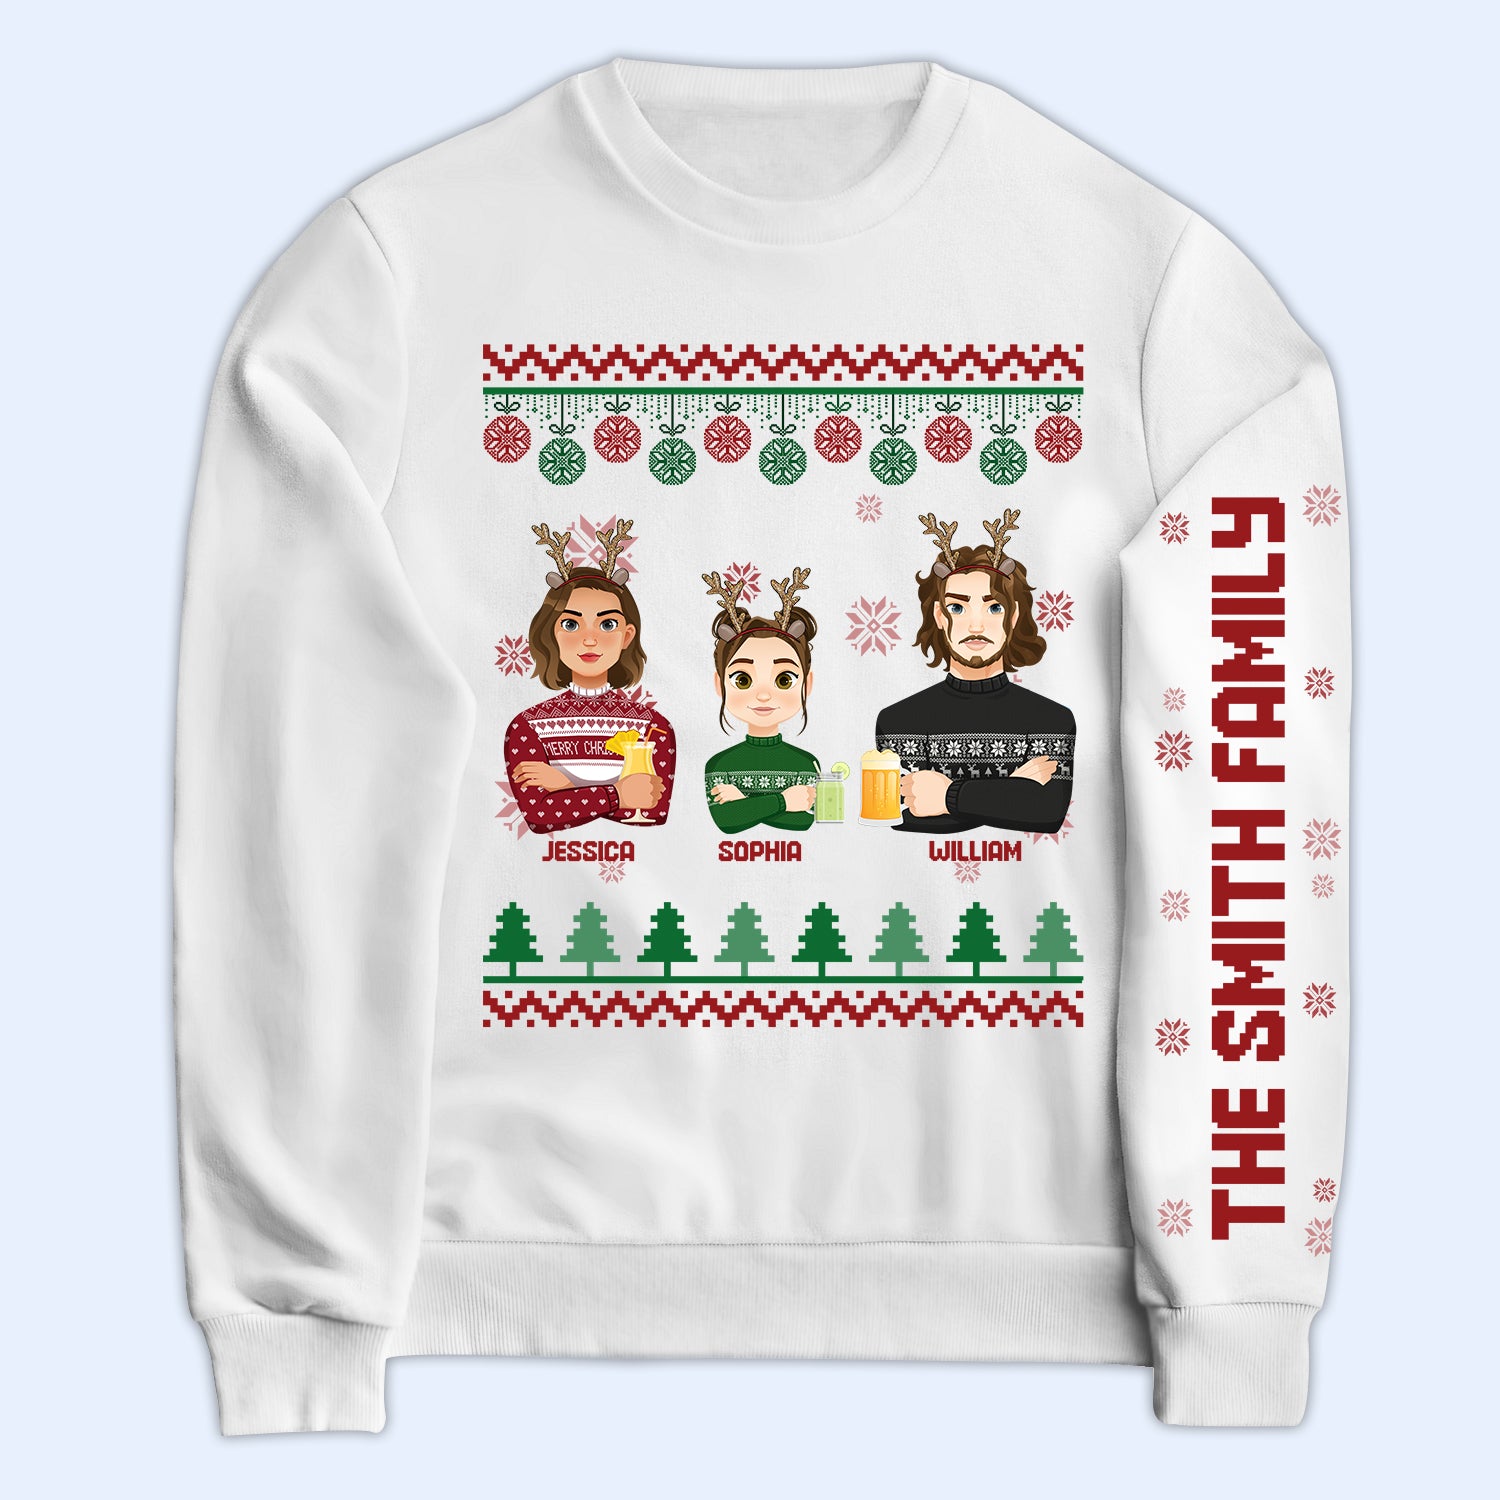 Flat Art - Christmas, Funny Gift For Family, Couple, Dad, Mom, Grandpa, Grandma - Personalized Sweatshirt With Sleeve Imprint